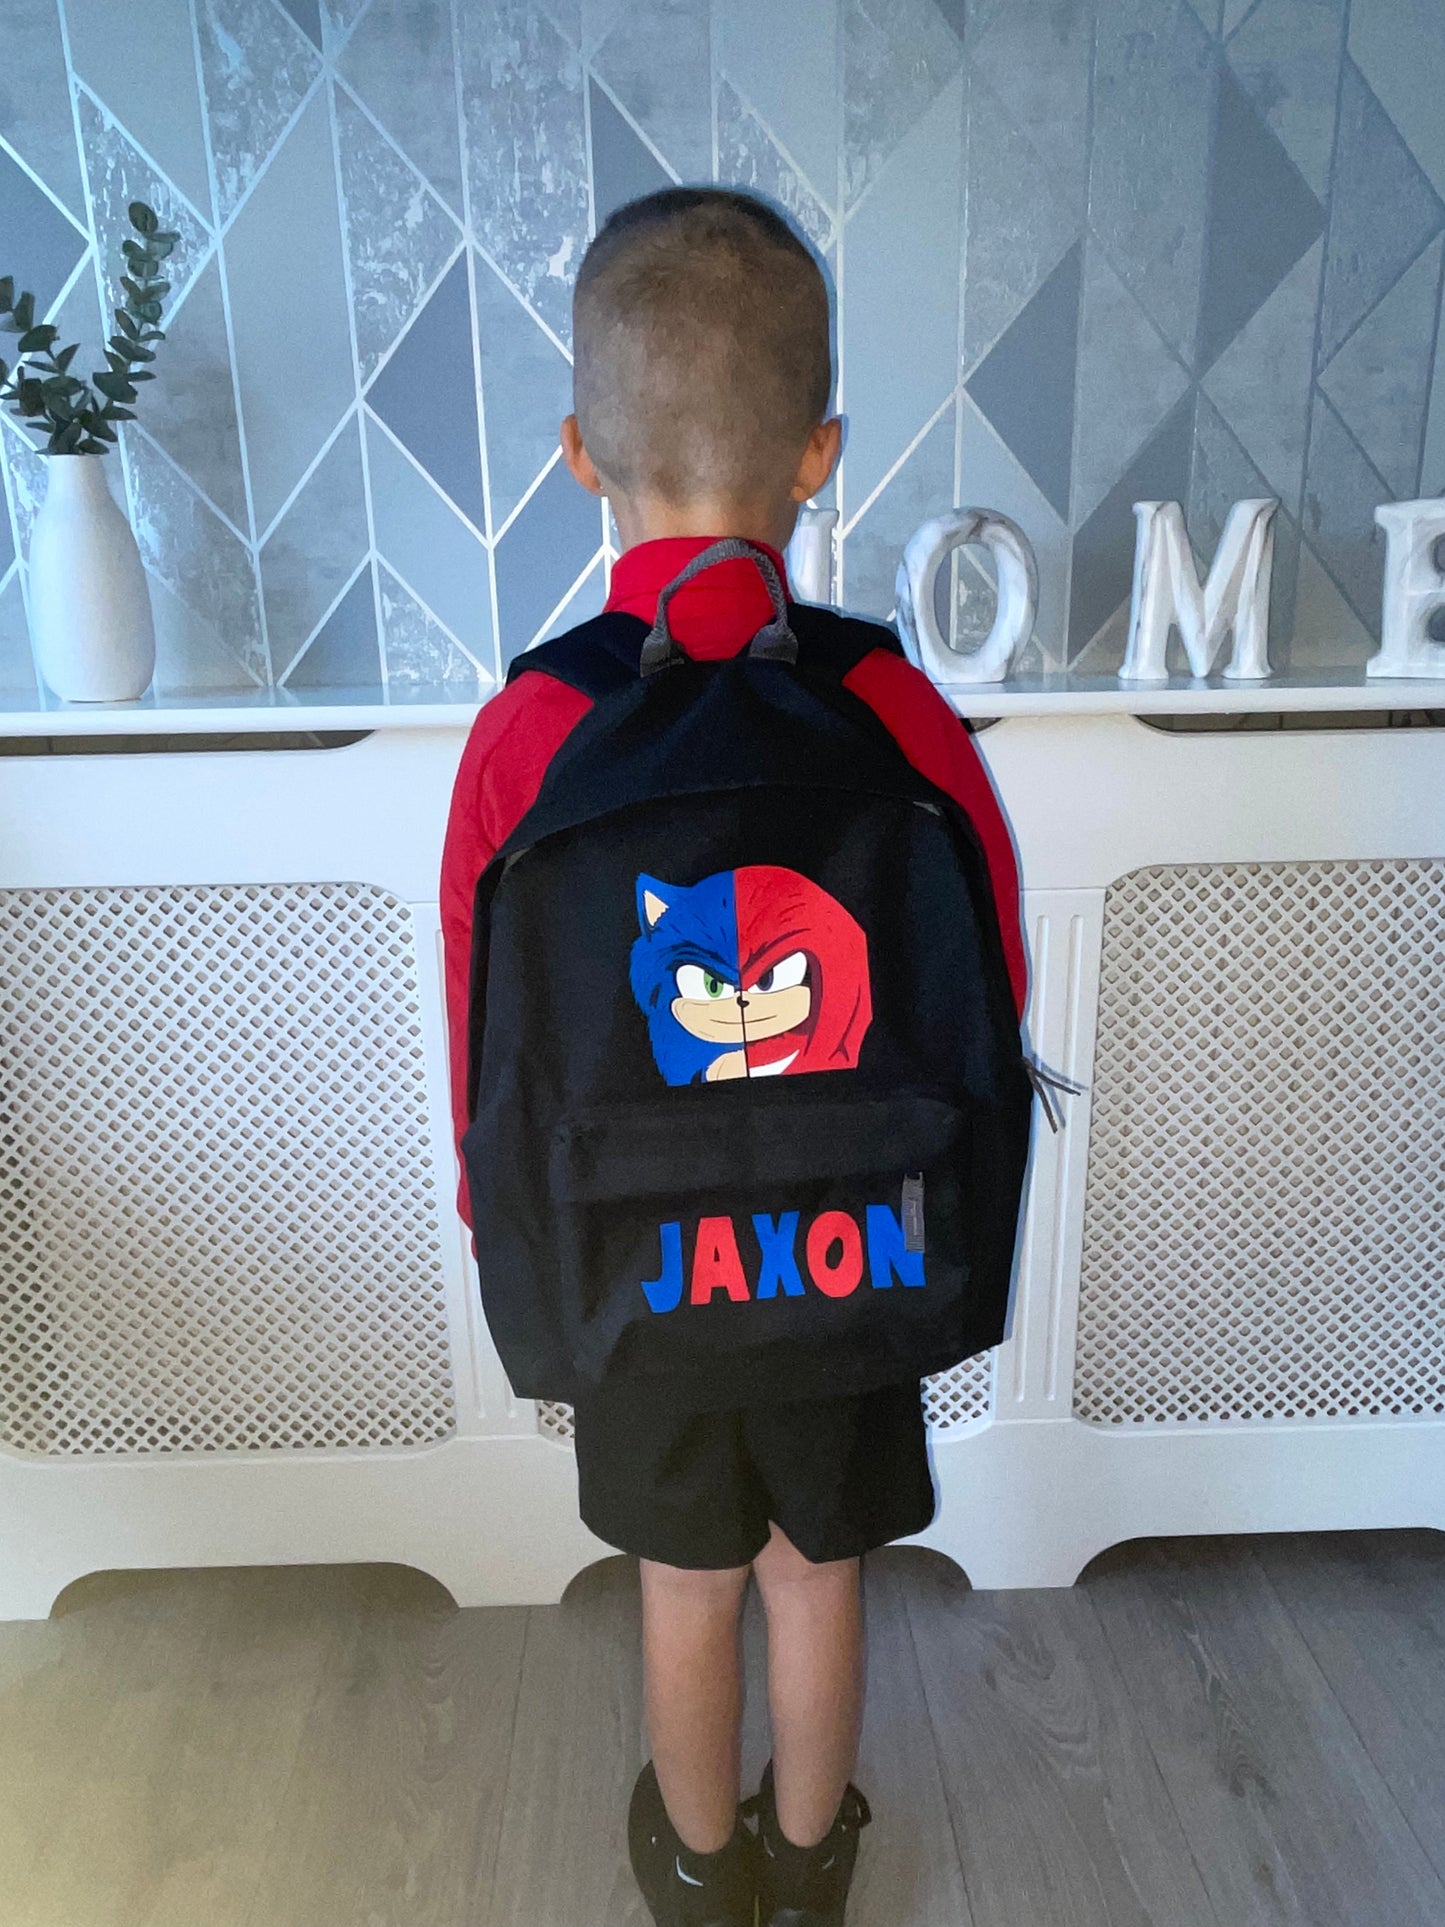 Personalised Character Small Backpack 9 Litre - Rucksack - School Bag, Weekend Bag, Nursey Bag, Children's Bag - Back To School